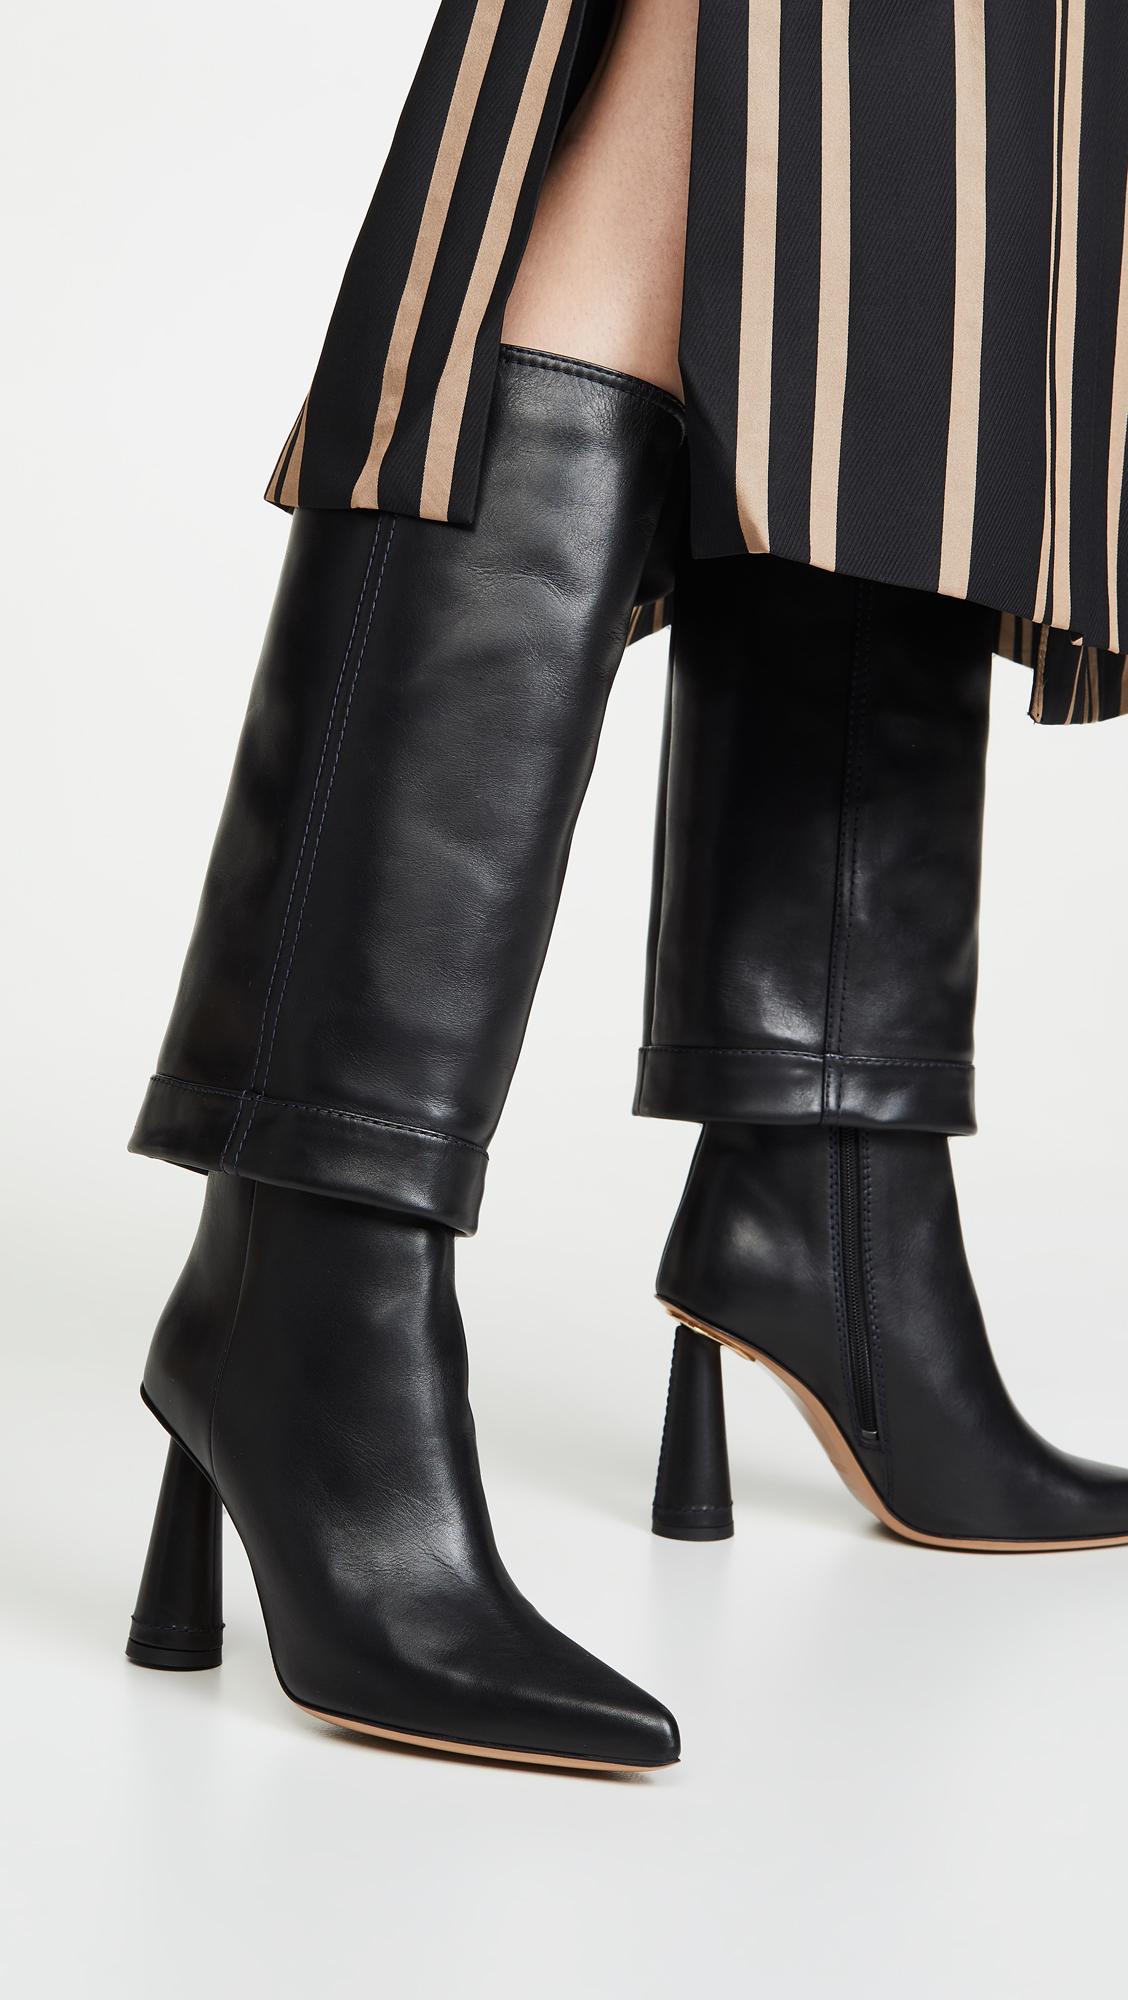 Jacquemus Les Bottes Pantalon Leather Boots in Black - Save 49% - Lyst